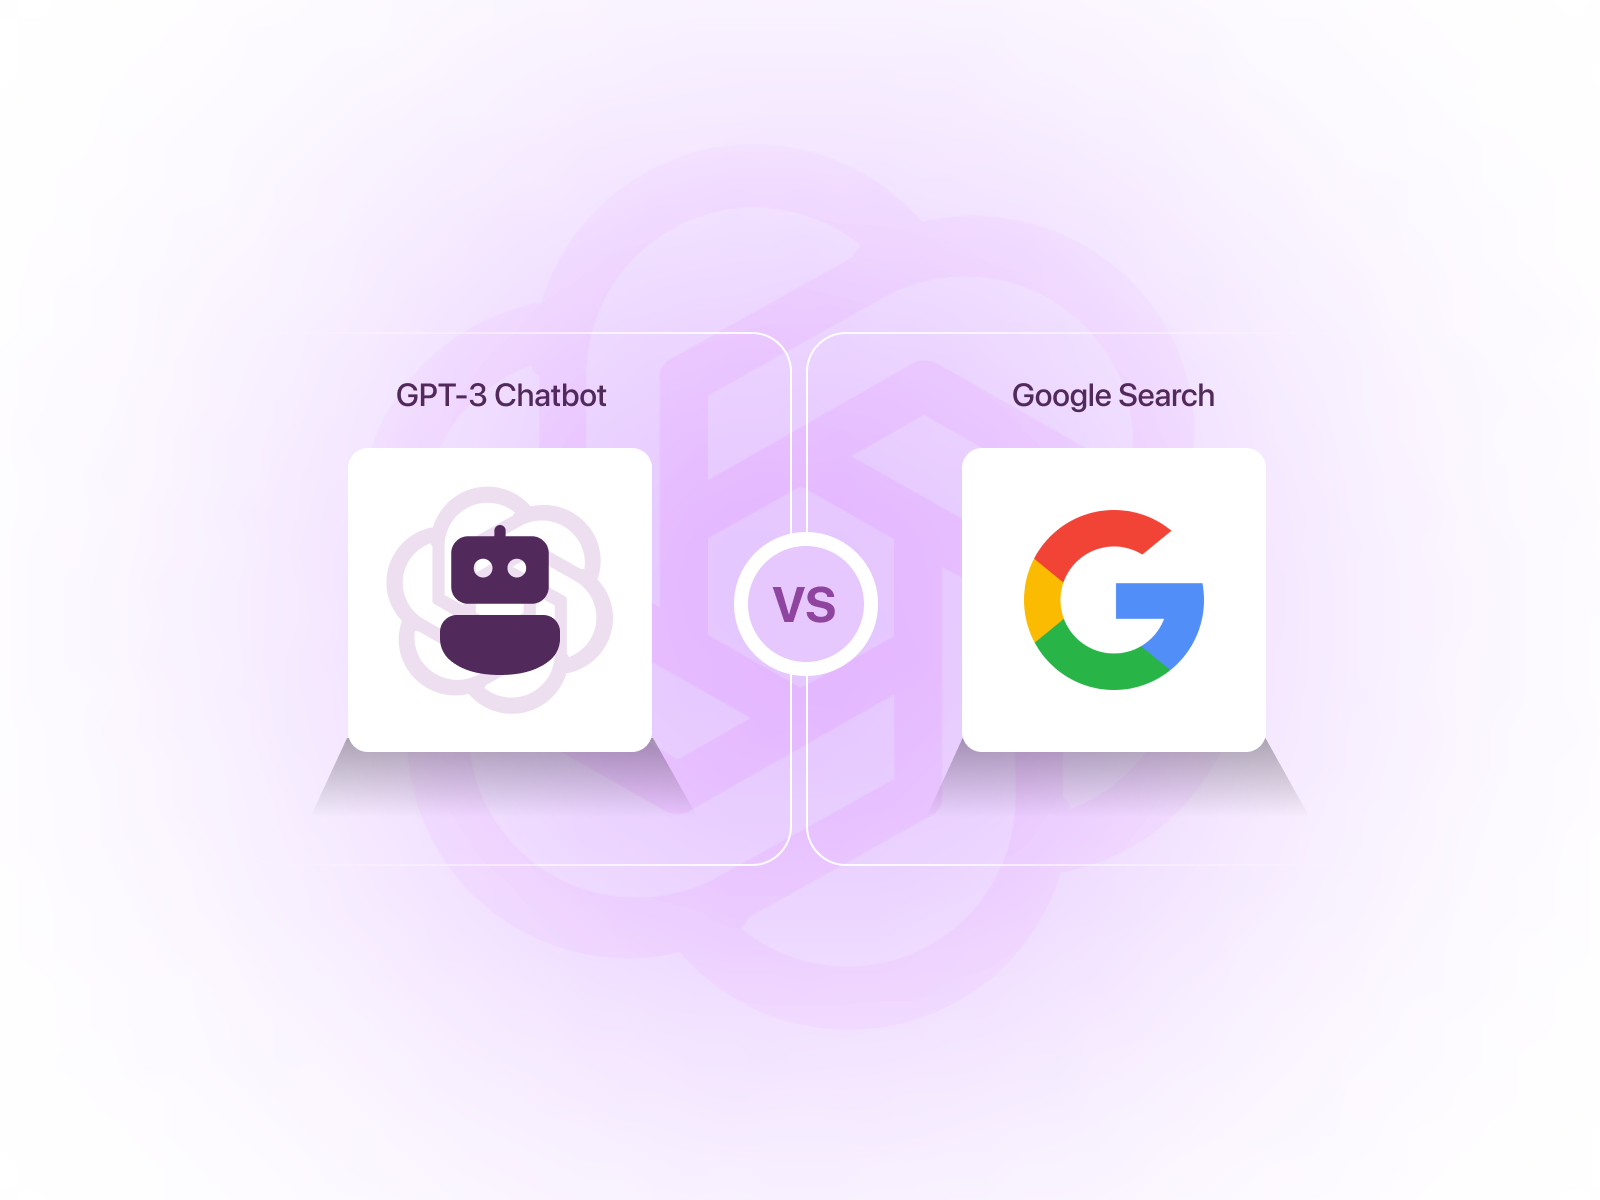 GPT-3 Chatbot vs Google Search